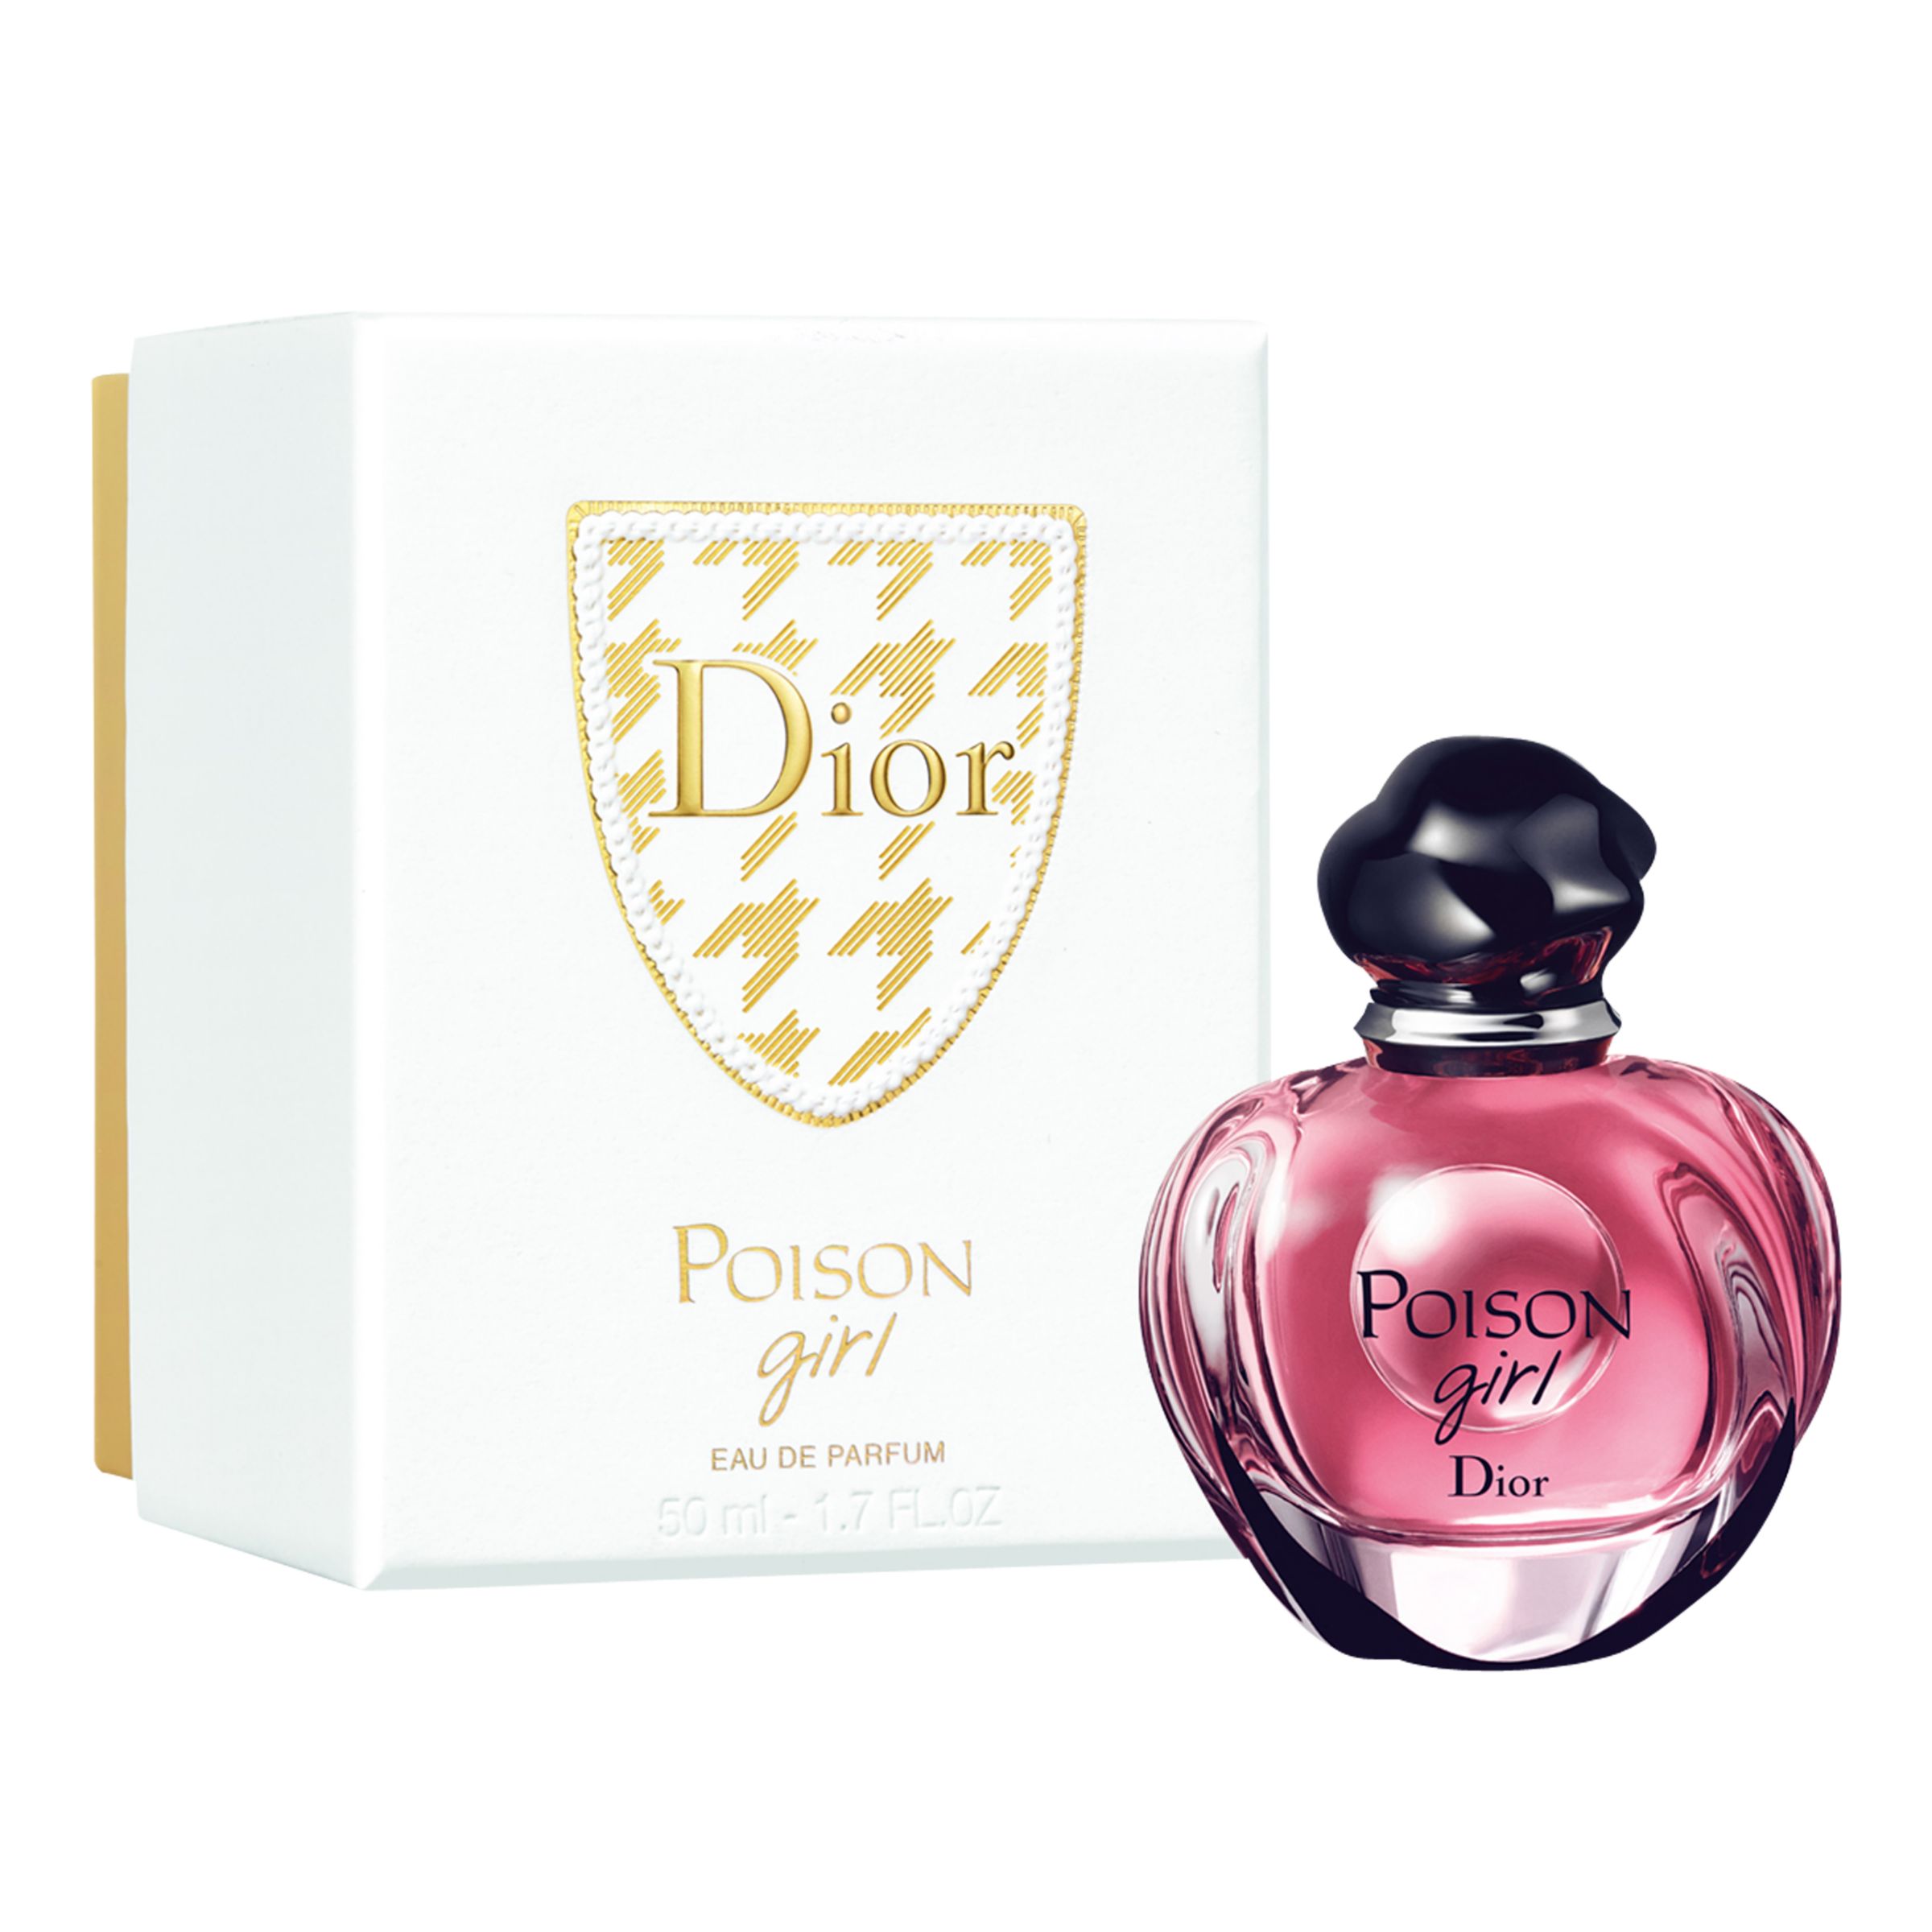 Dior Poison Girl 50ml Eau de Parfum 